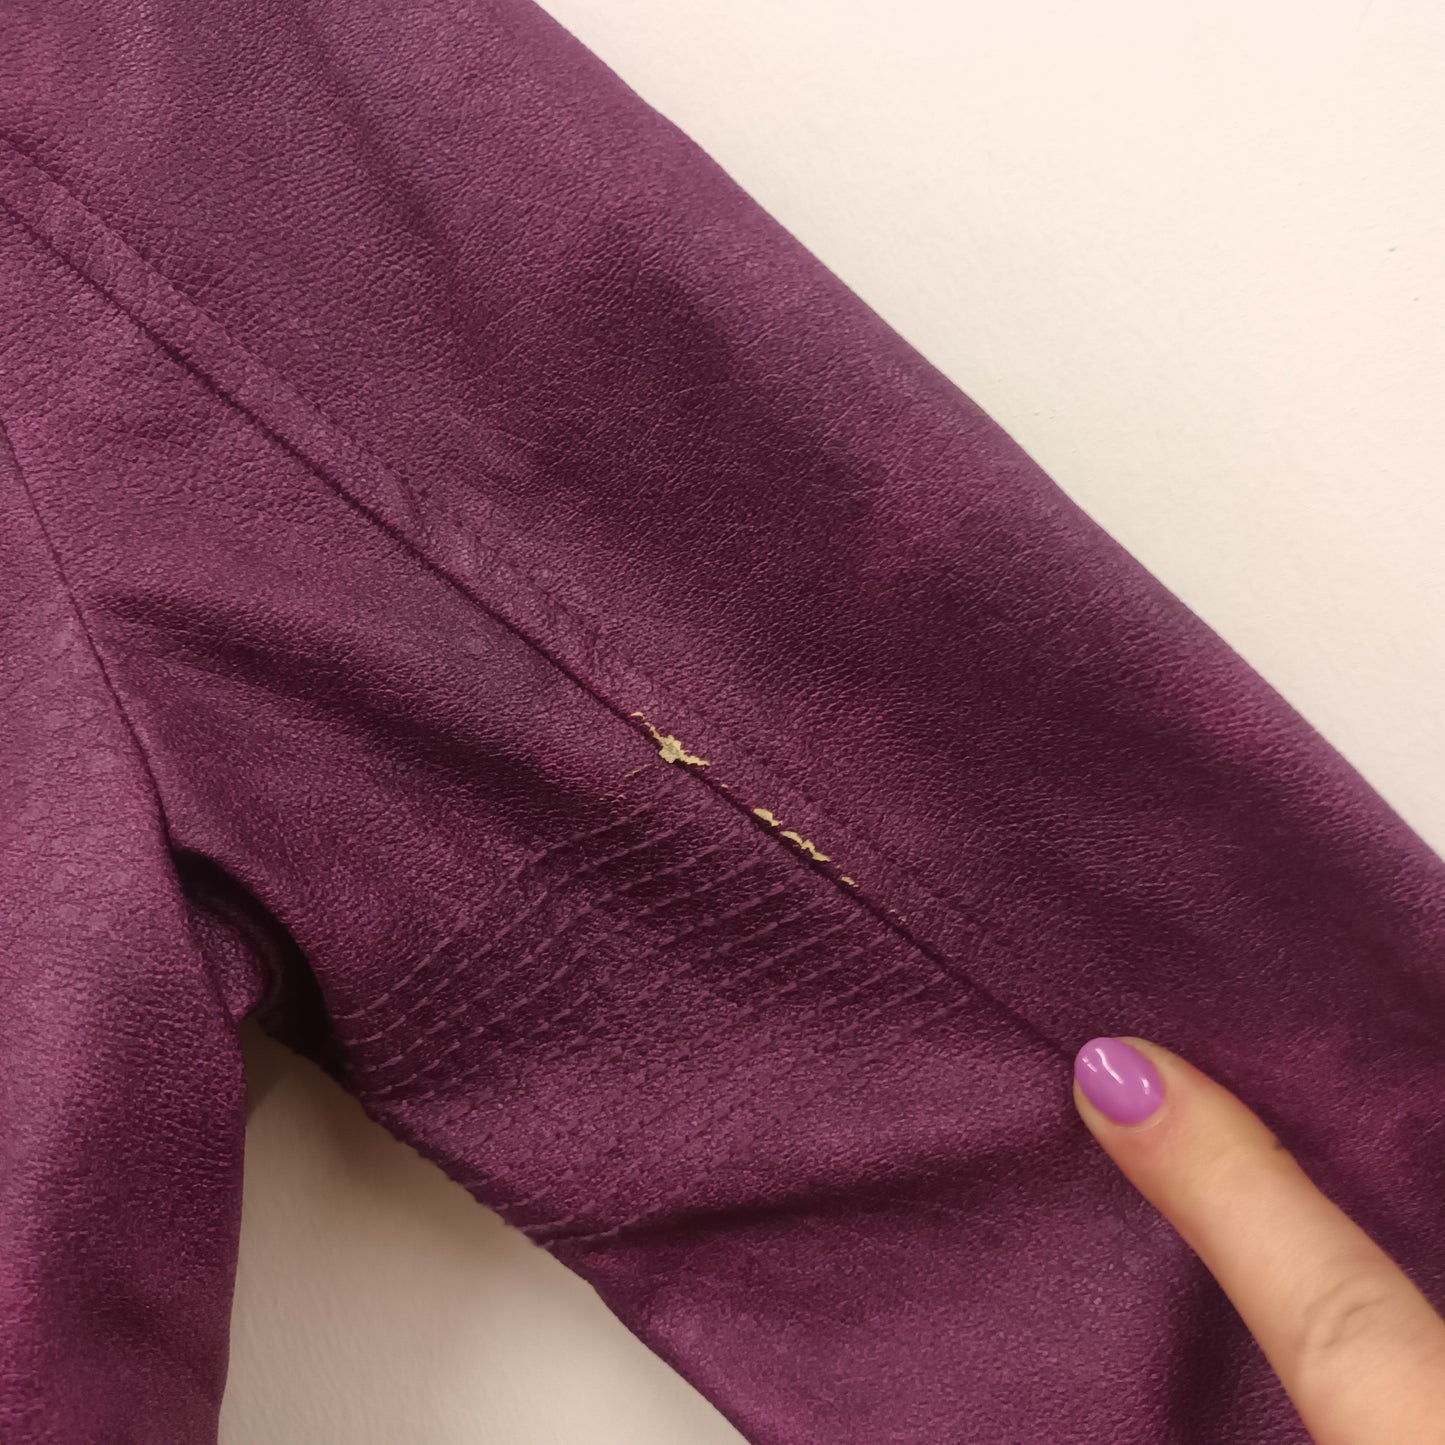 Disney Store 13 Years Descendants Purple Faux Leather Jacket